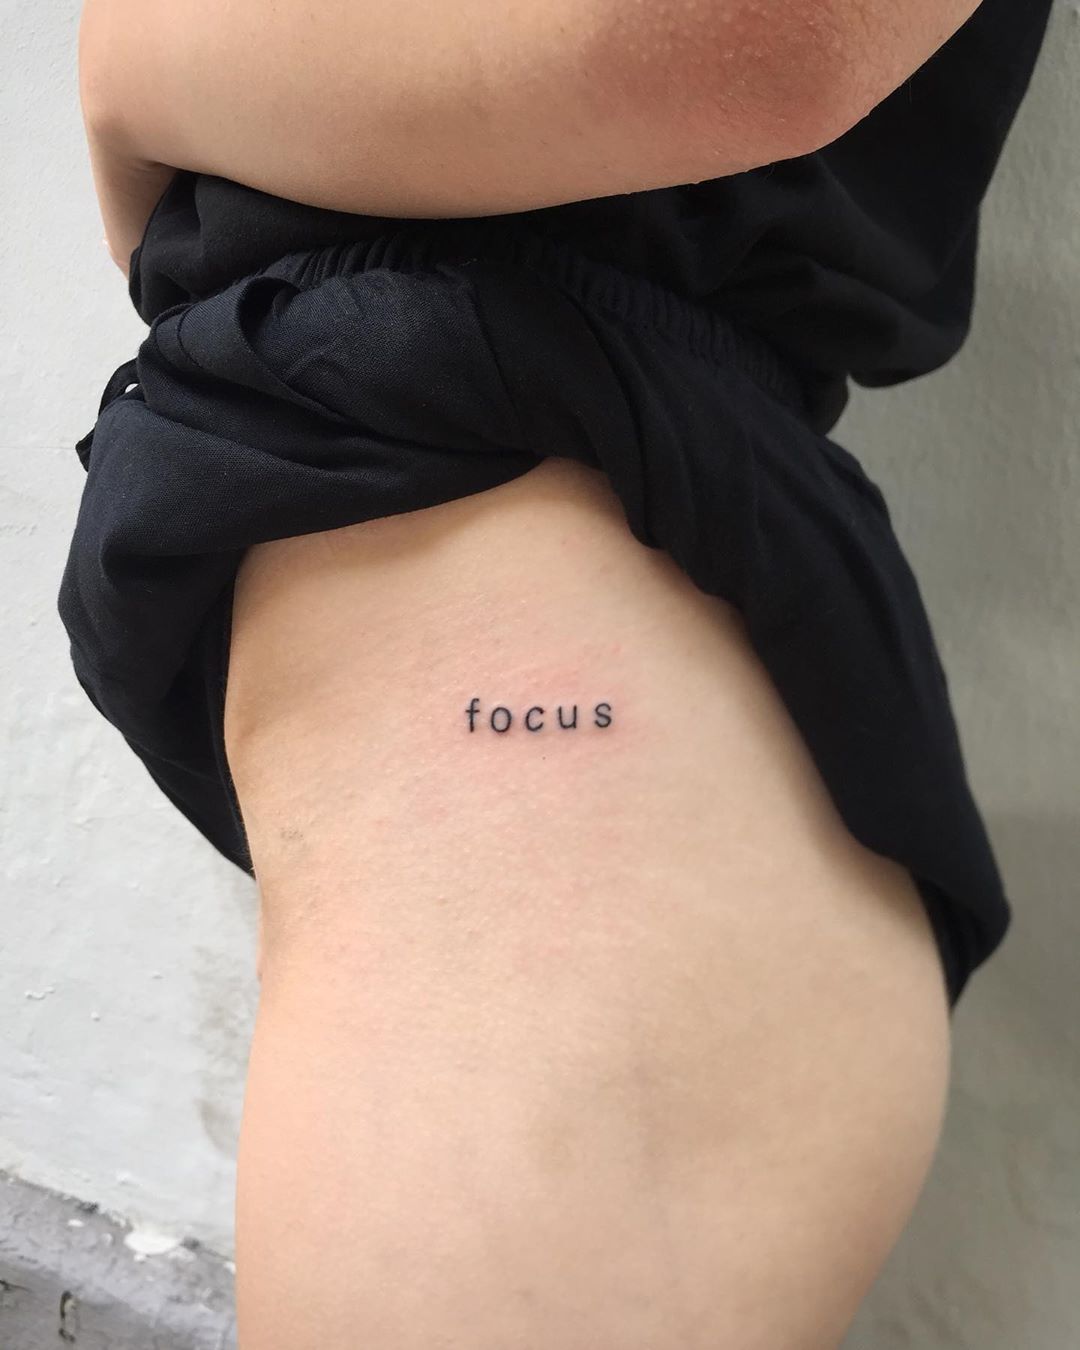 Focus tattoo by Philipp Eid